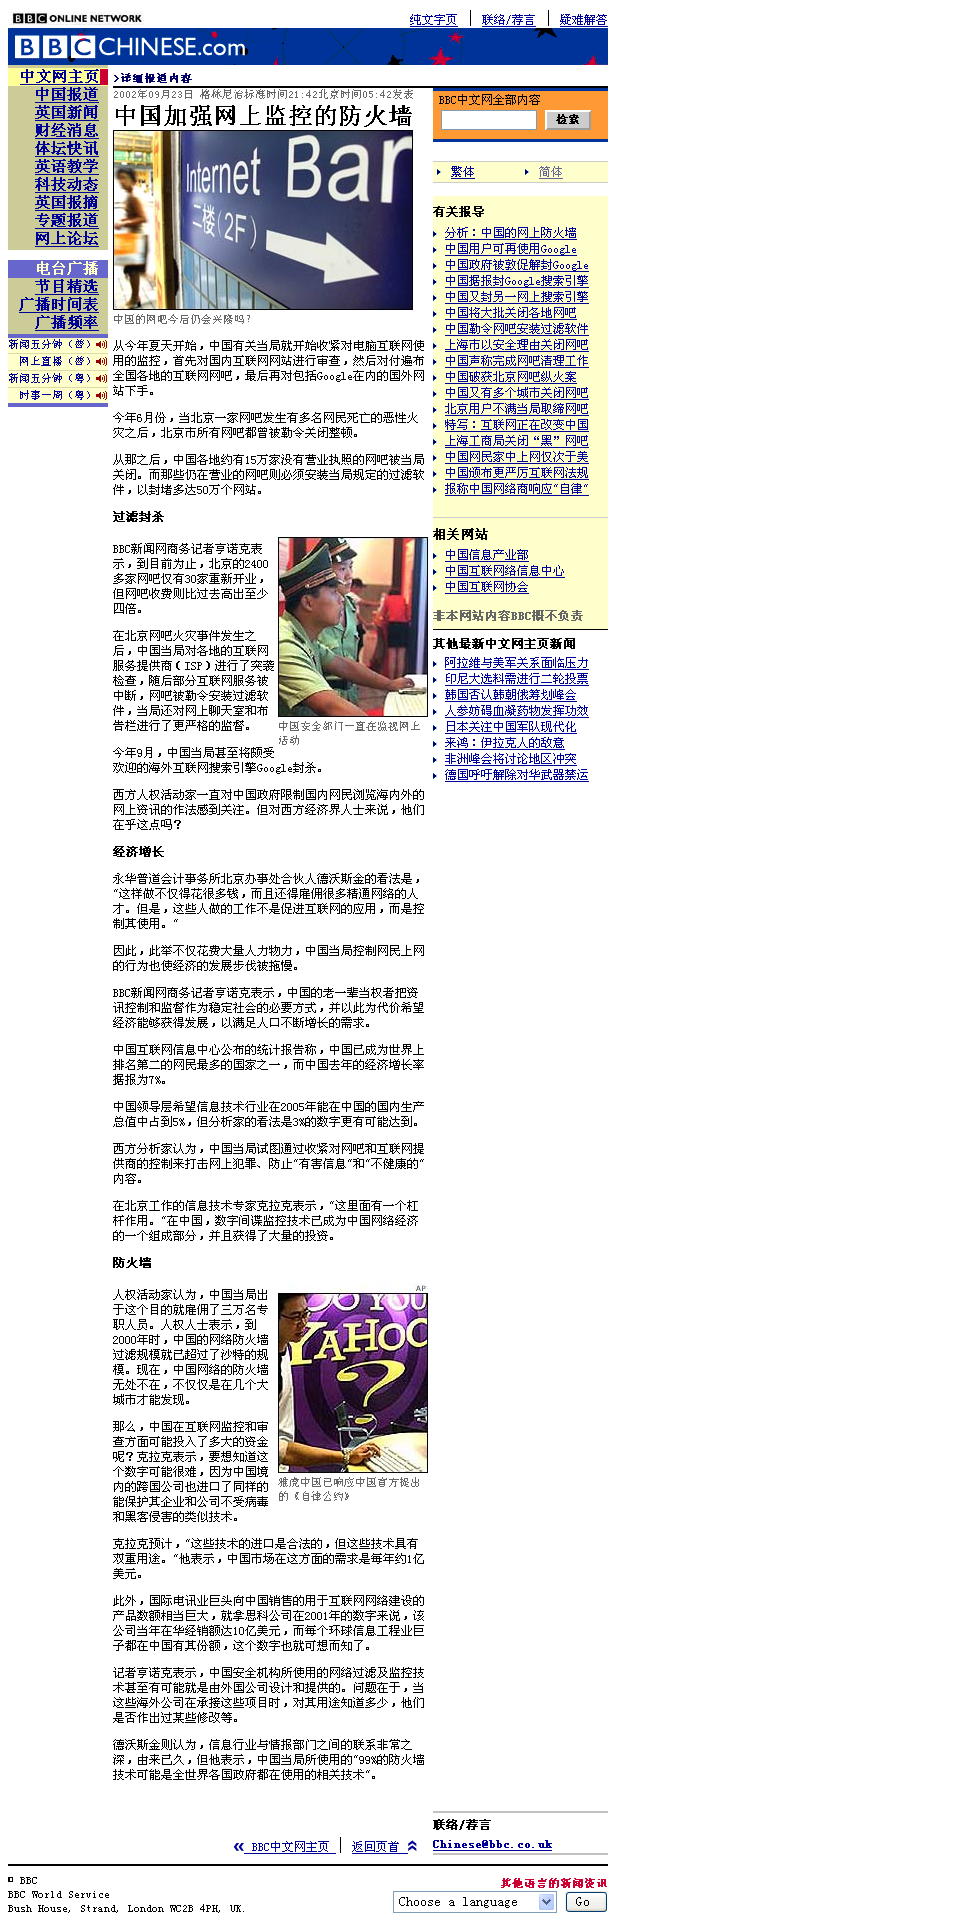 BBC Chinese  中文网主页  中国加强网上监控的防火墙.png